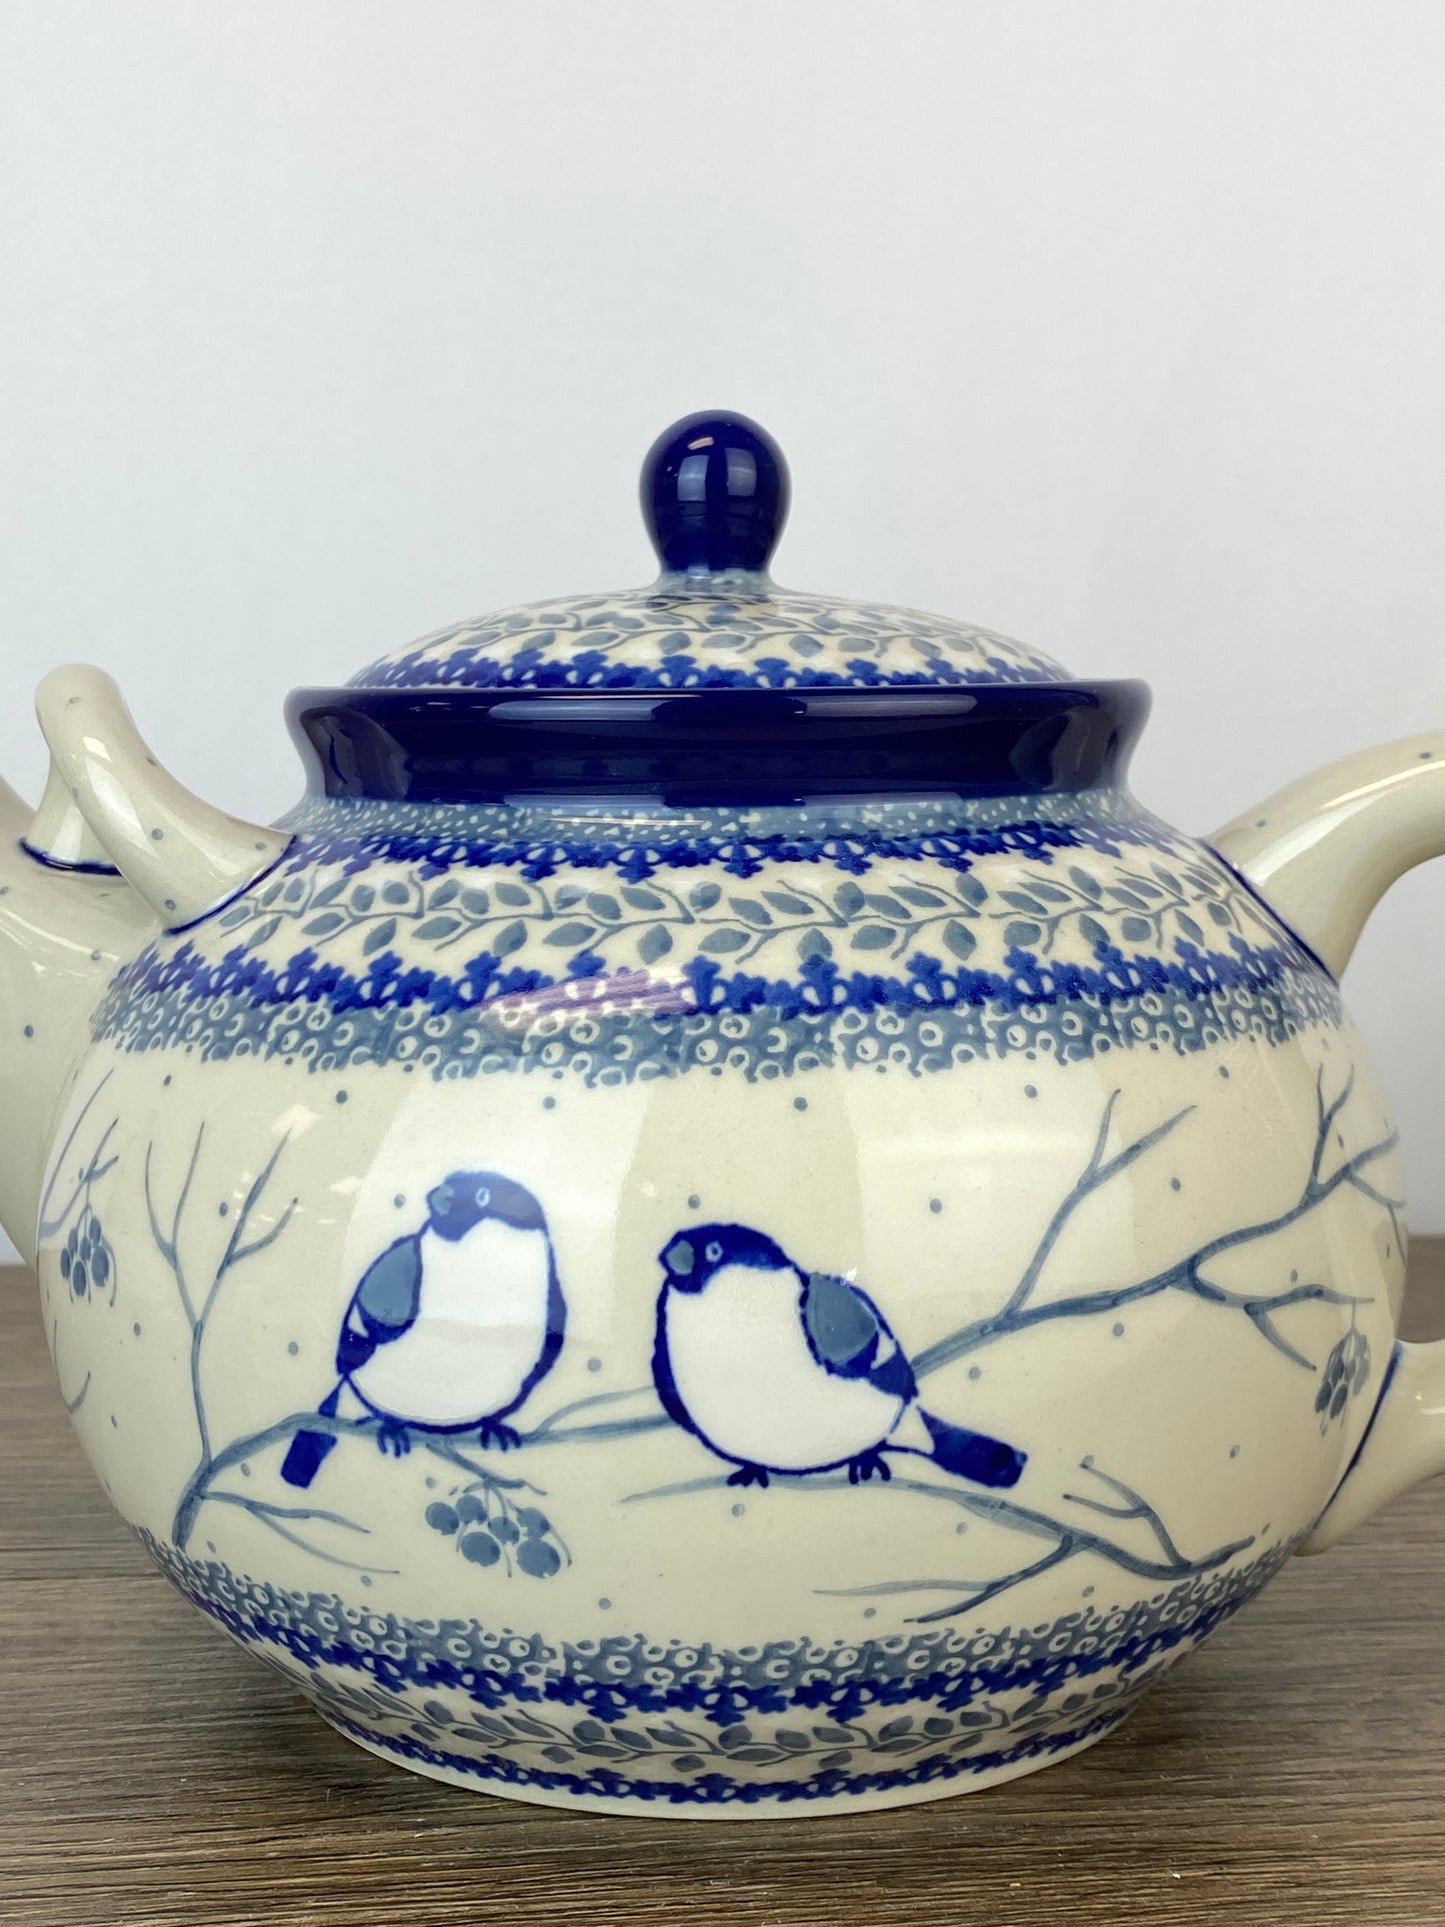 7 Cup Unikat Teapot - Shape 444 - Pattern U4830